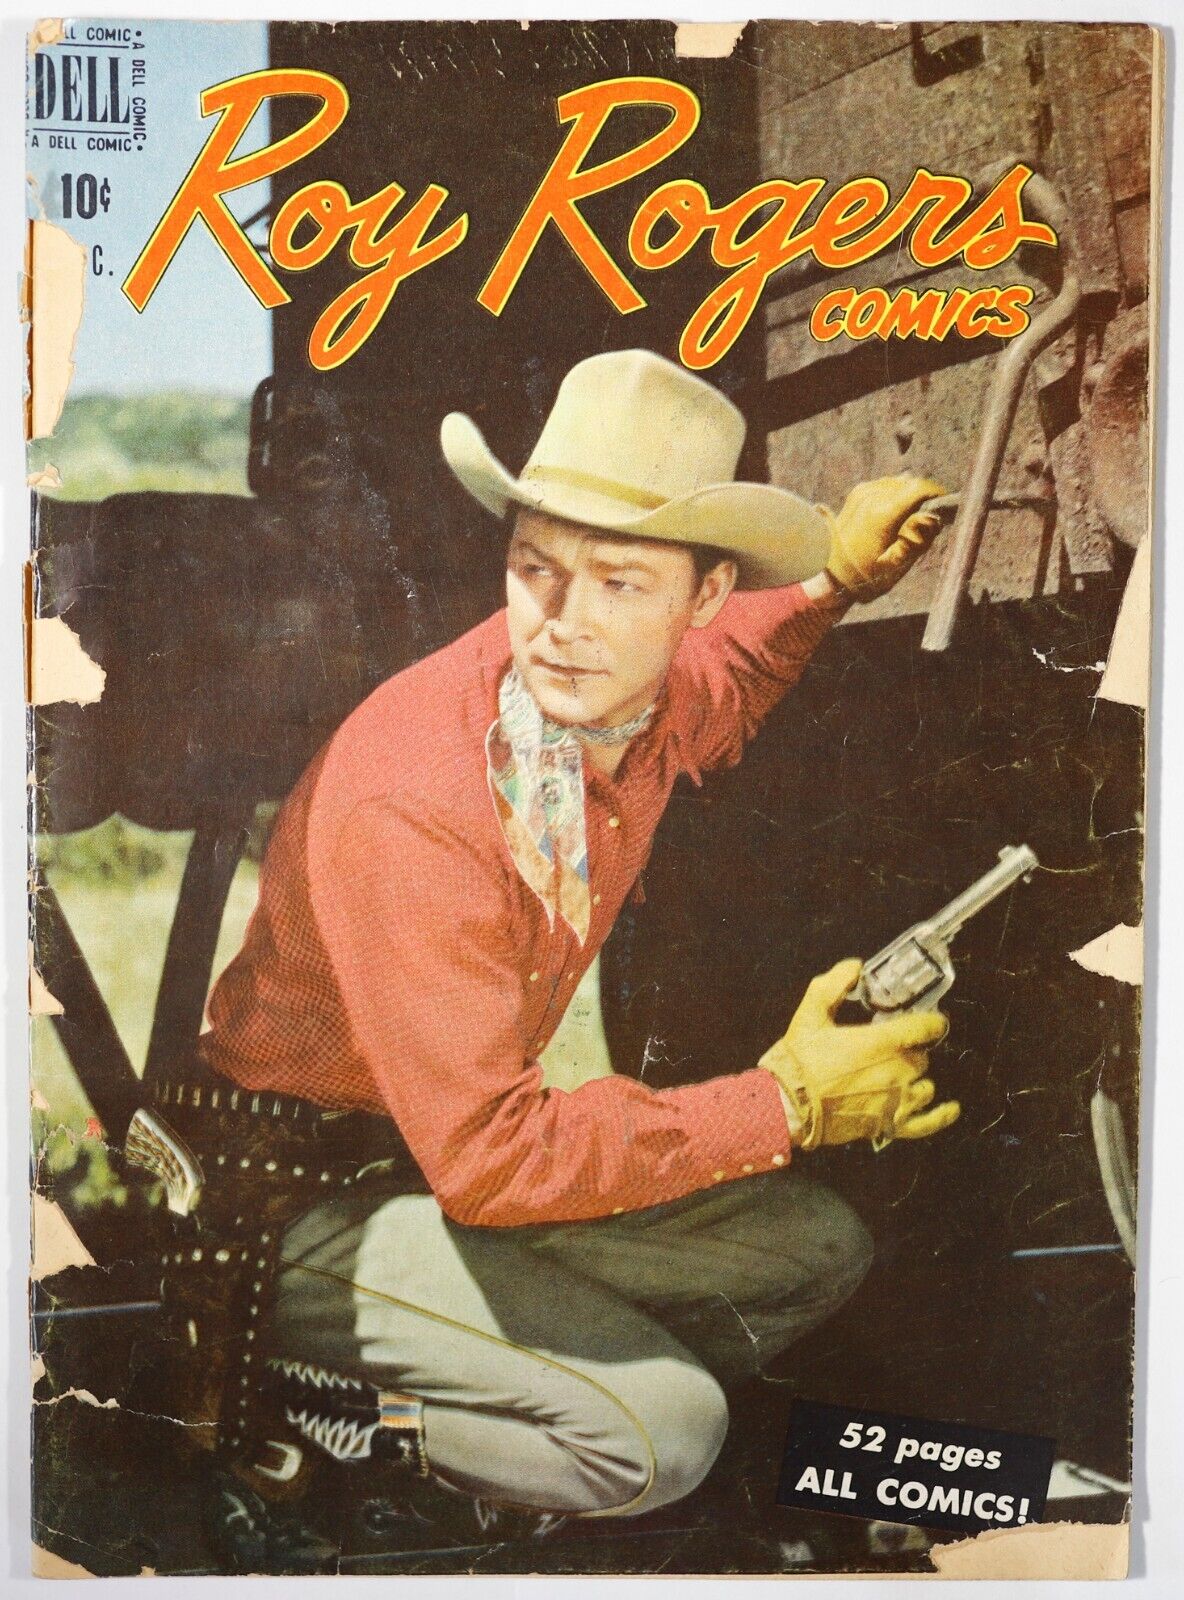 Roy Rogers Comics #24 - $0.10 Dell Pub., Dec. 1949 - 52 pages, Photo Cover - GD